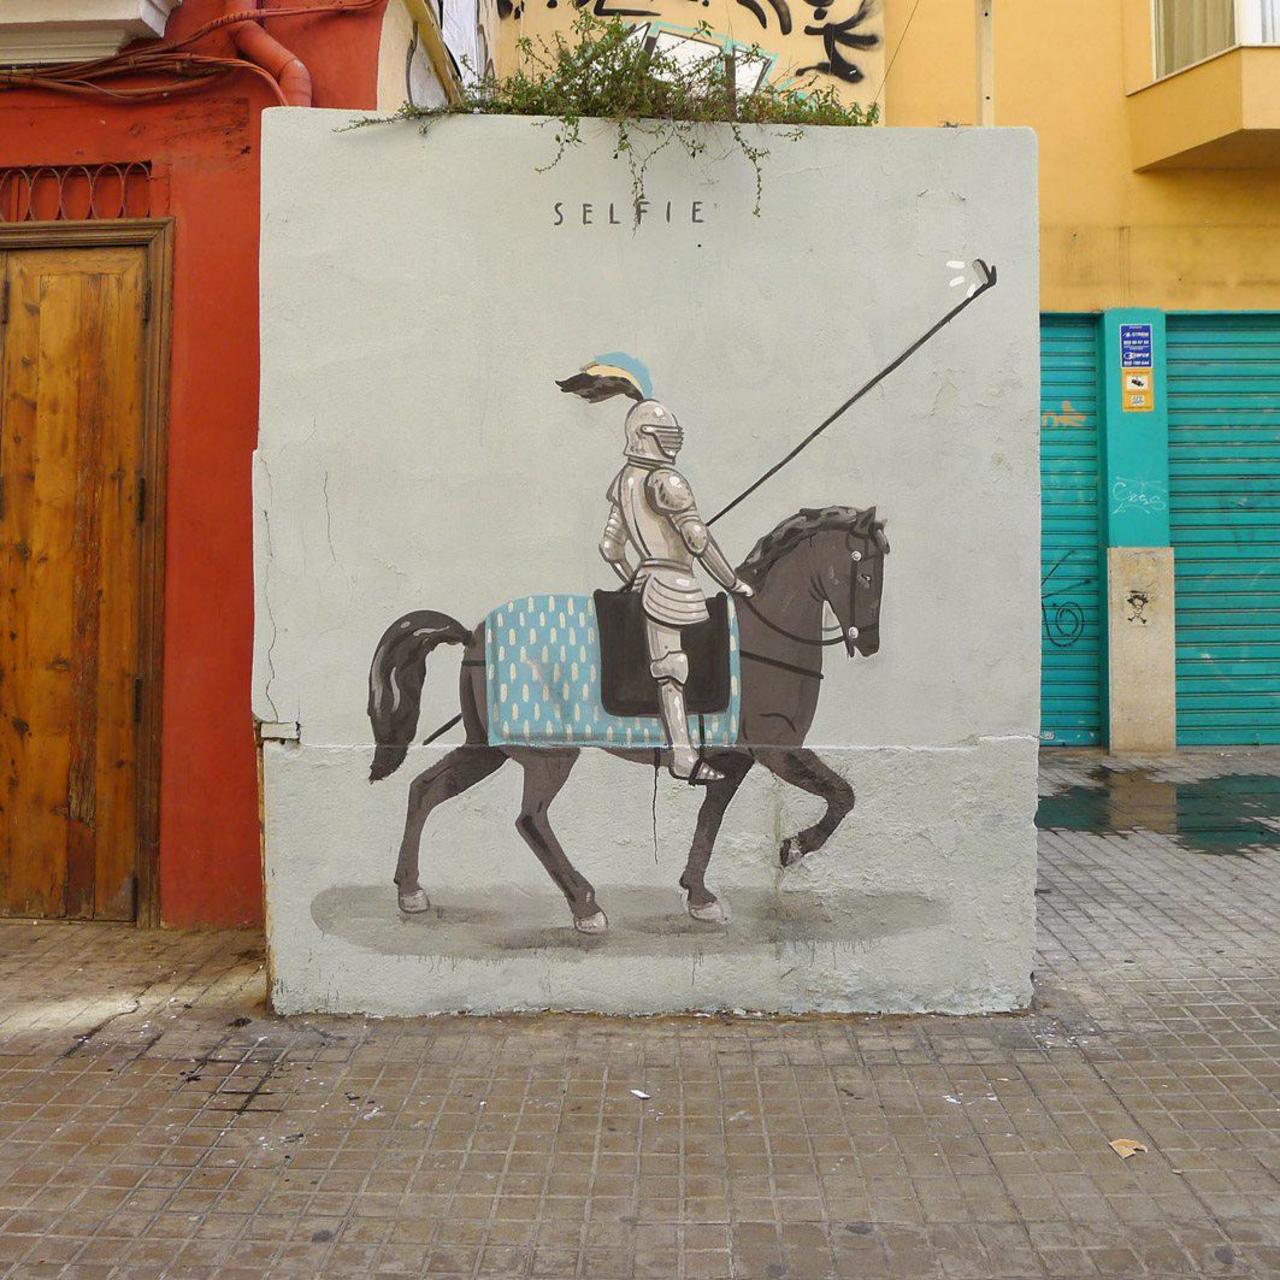 "@allcitycanvas: This is what @escif_ 's selfie looks like in Valencia, #Spain #mural #urbanart #streetart #graffiti http://t.co/nRYNx70BZd"